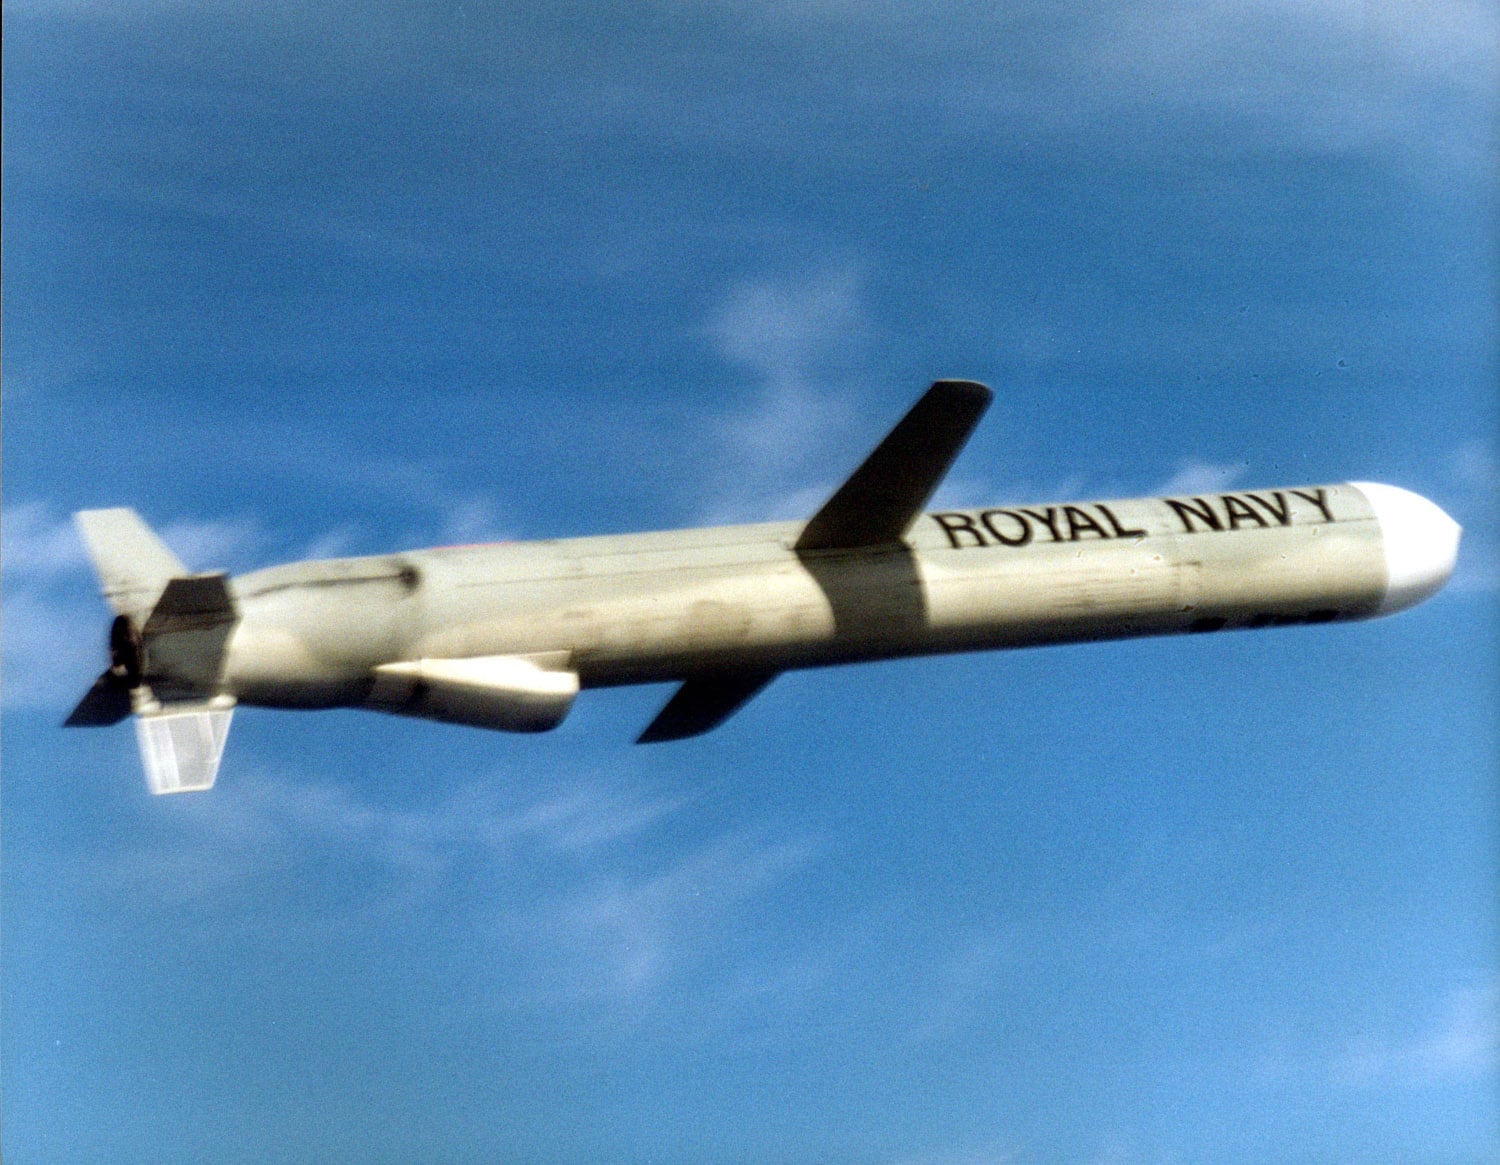 Tomahawk missile in flight.